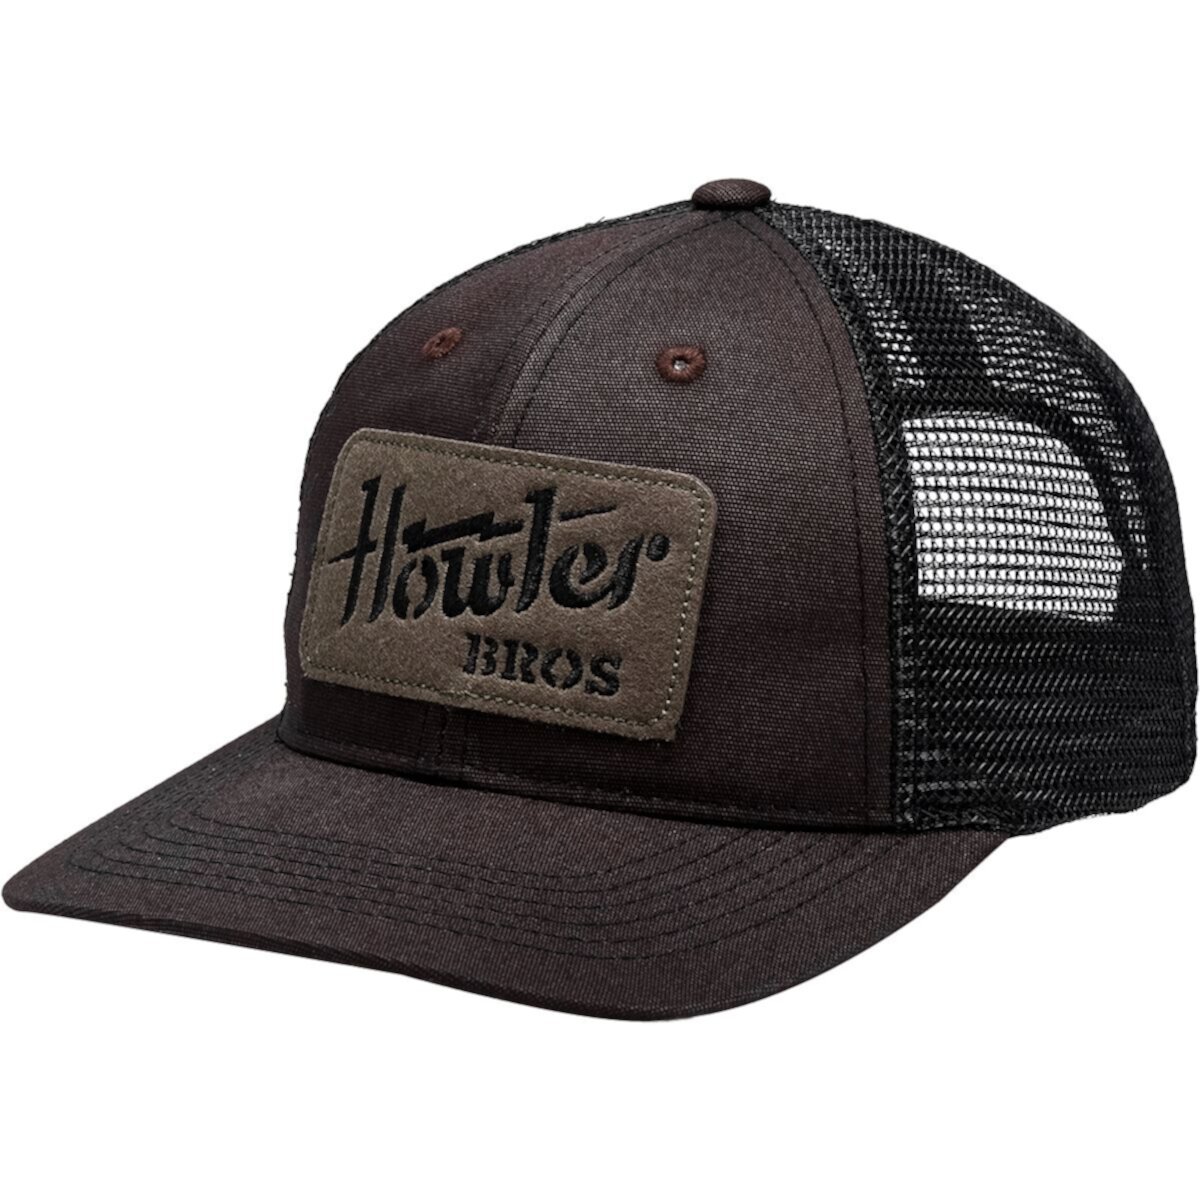 Шляпа-трафарет Howler Electric Howler Brothers